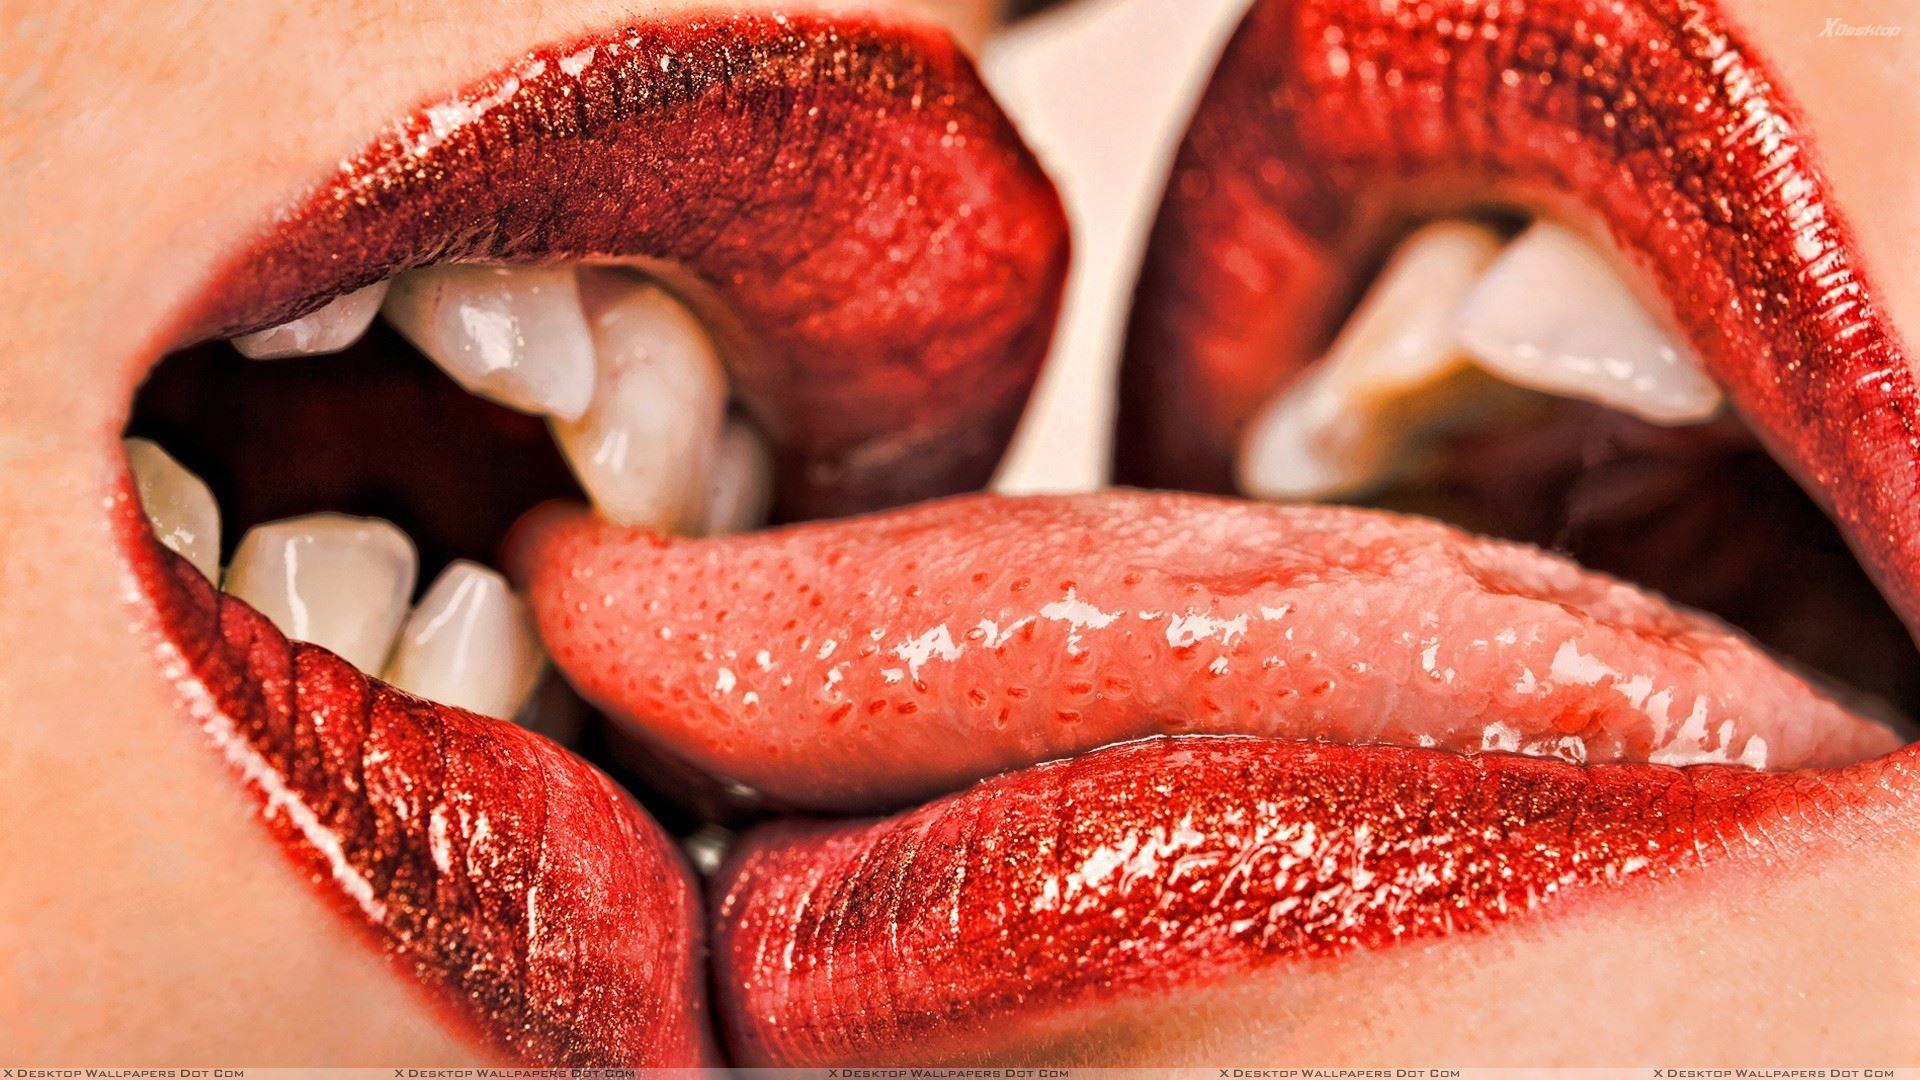 Lips kiss image Gallery